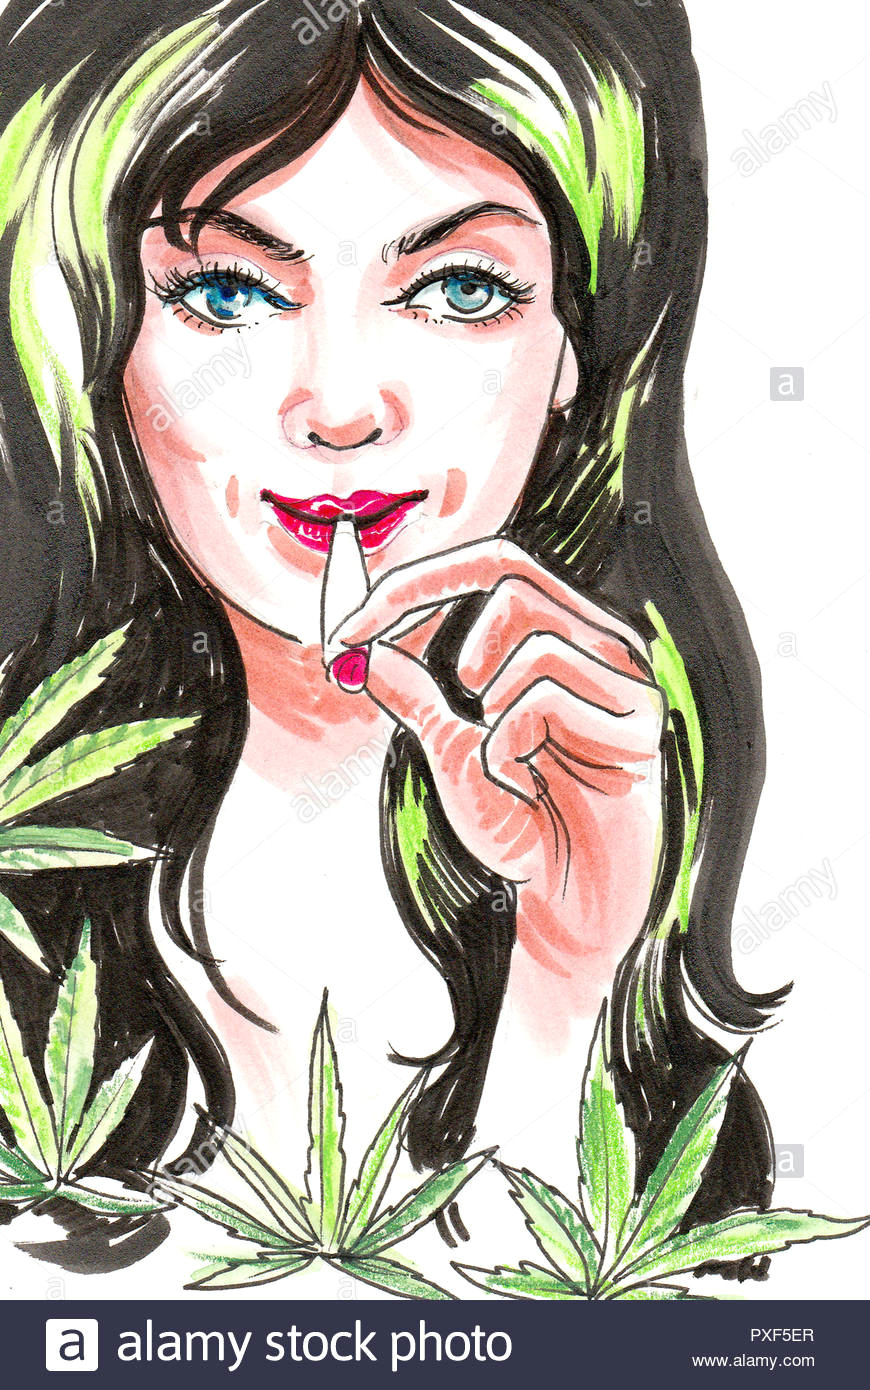 pretty woman smoking marijuana joint ink and watercolor illustration stock image